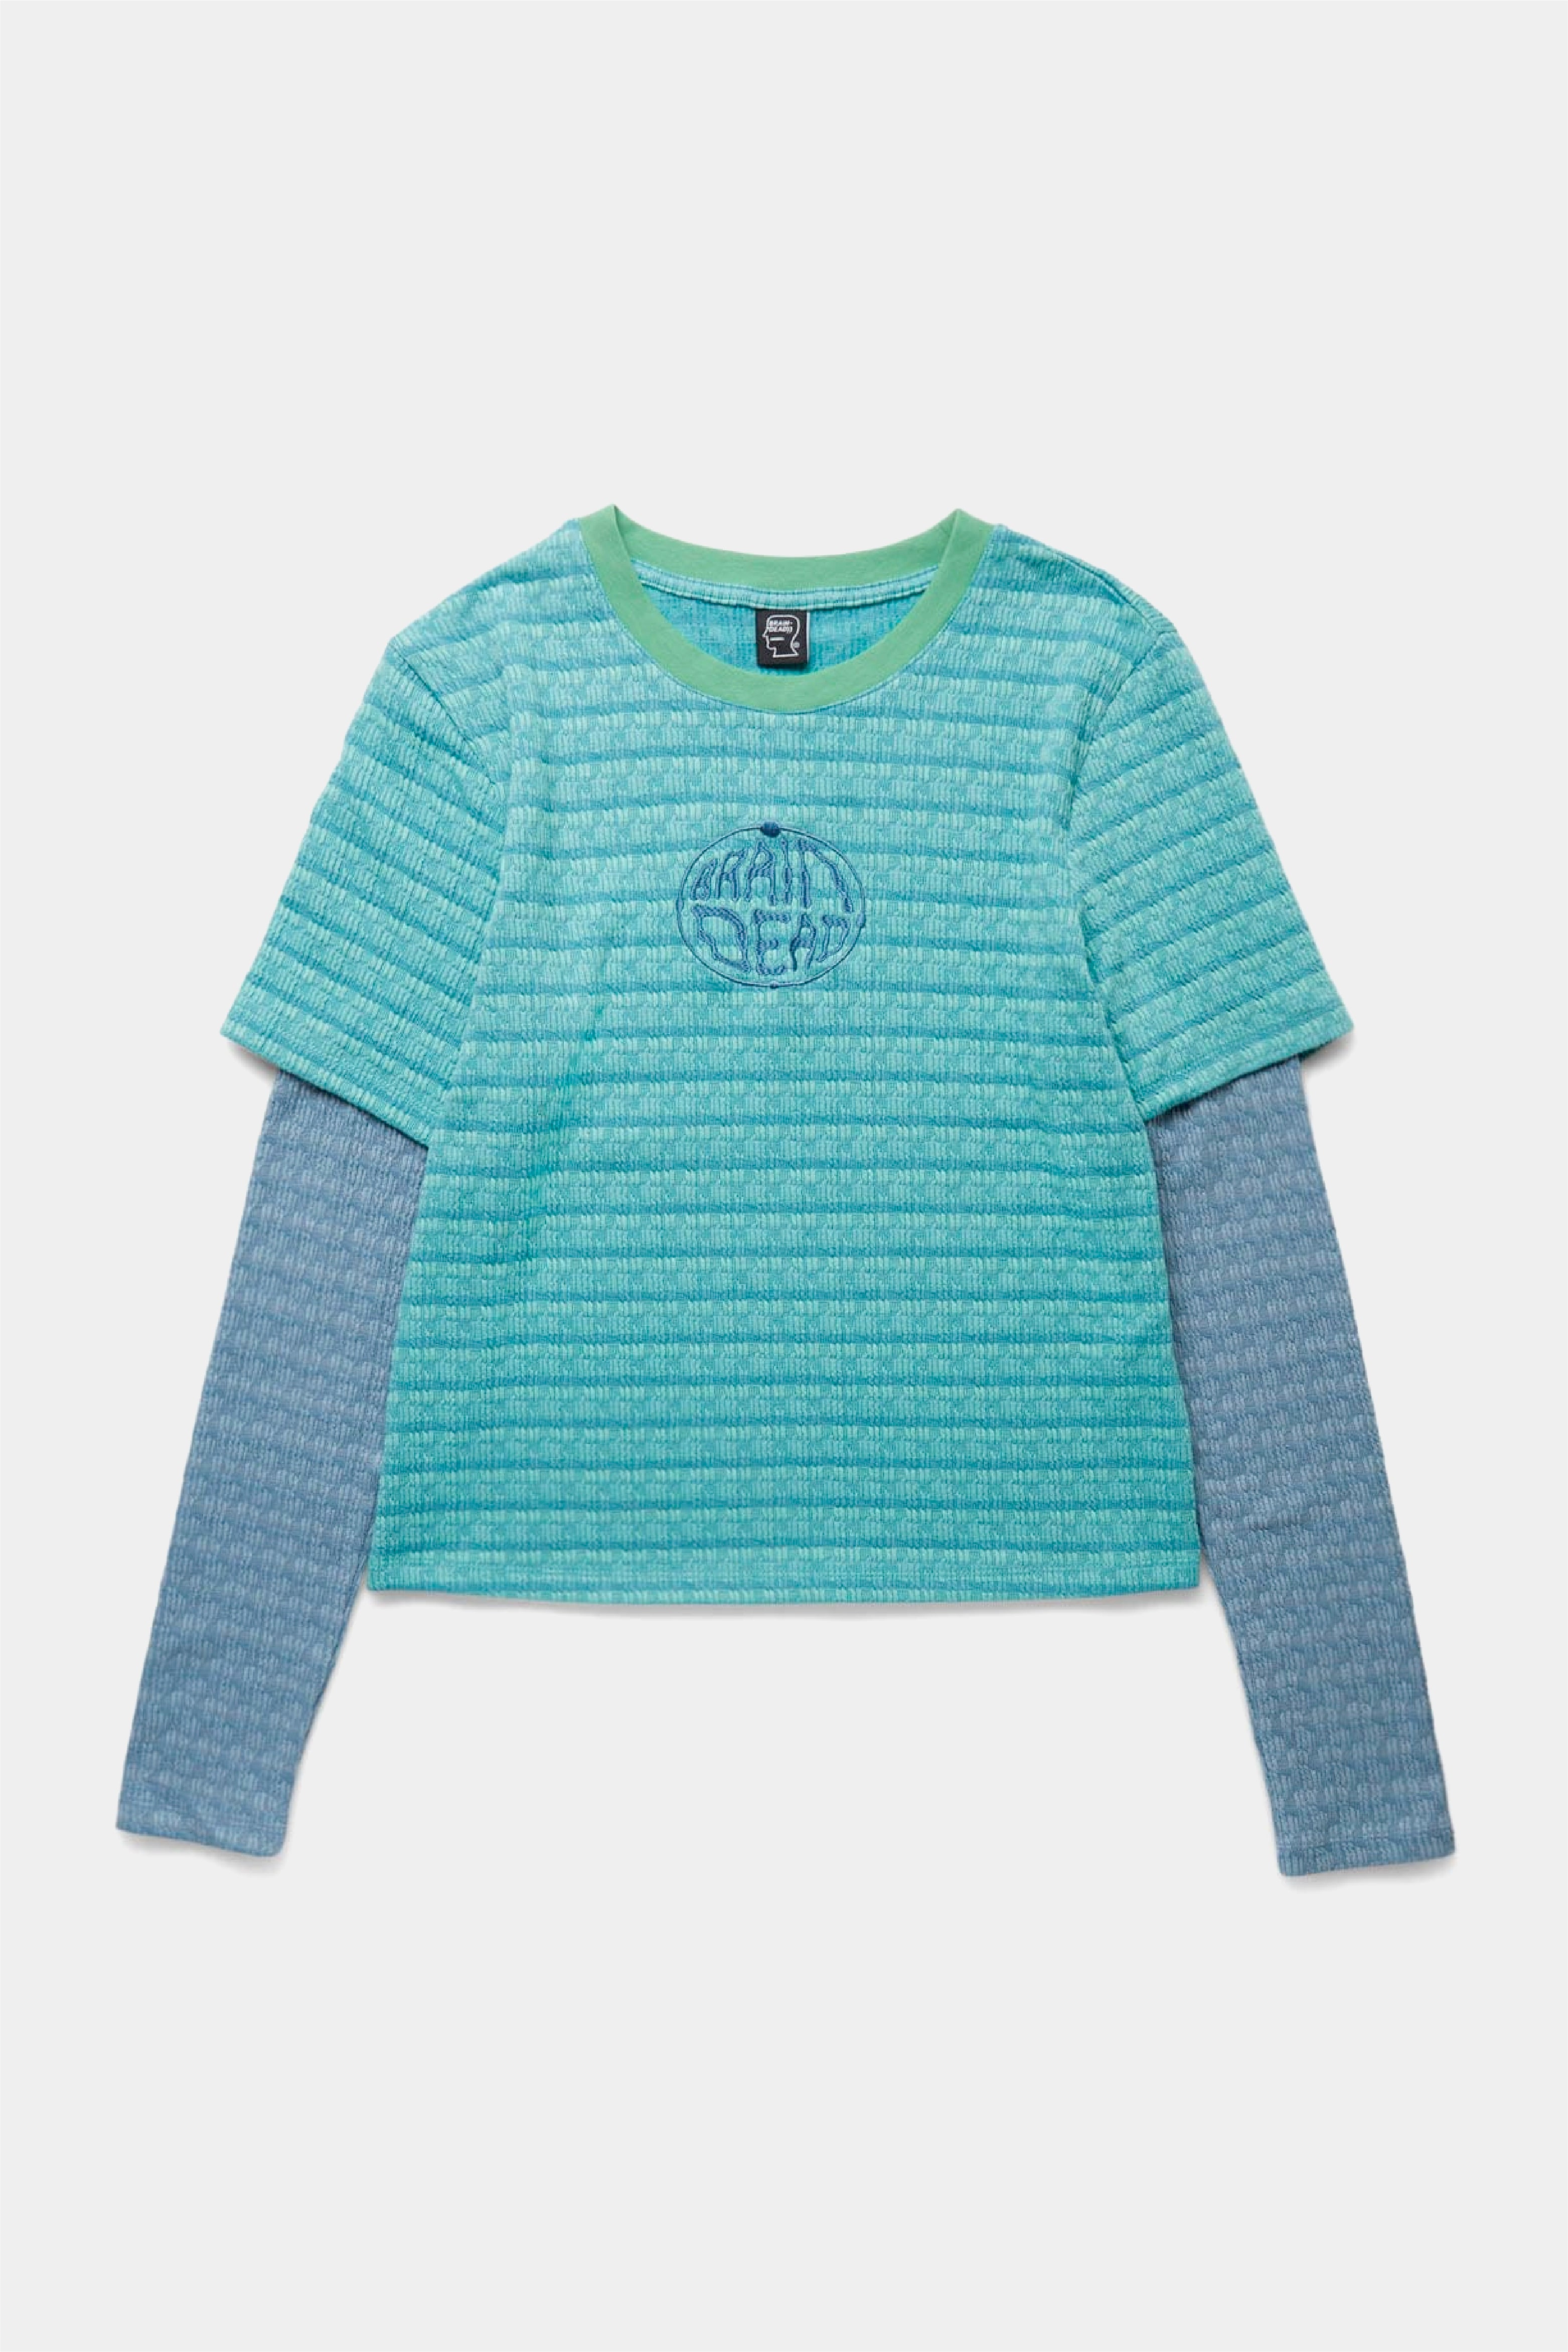 Selectshop FRAME - BRAIN DEAD Worldwide Long Sleeve Baby T-Shirt T-Shirts Concept Store Dubai